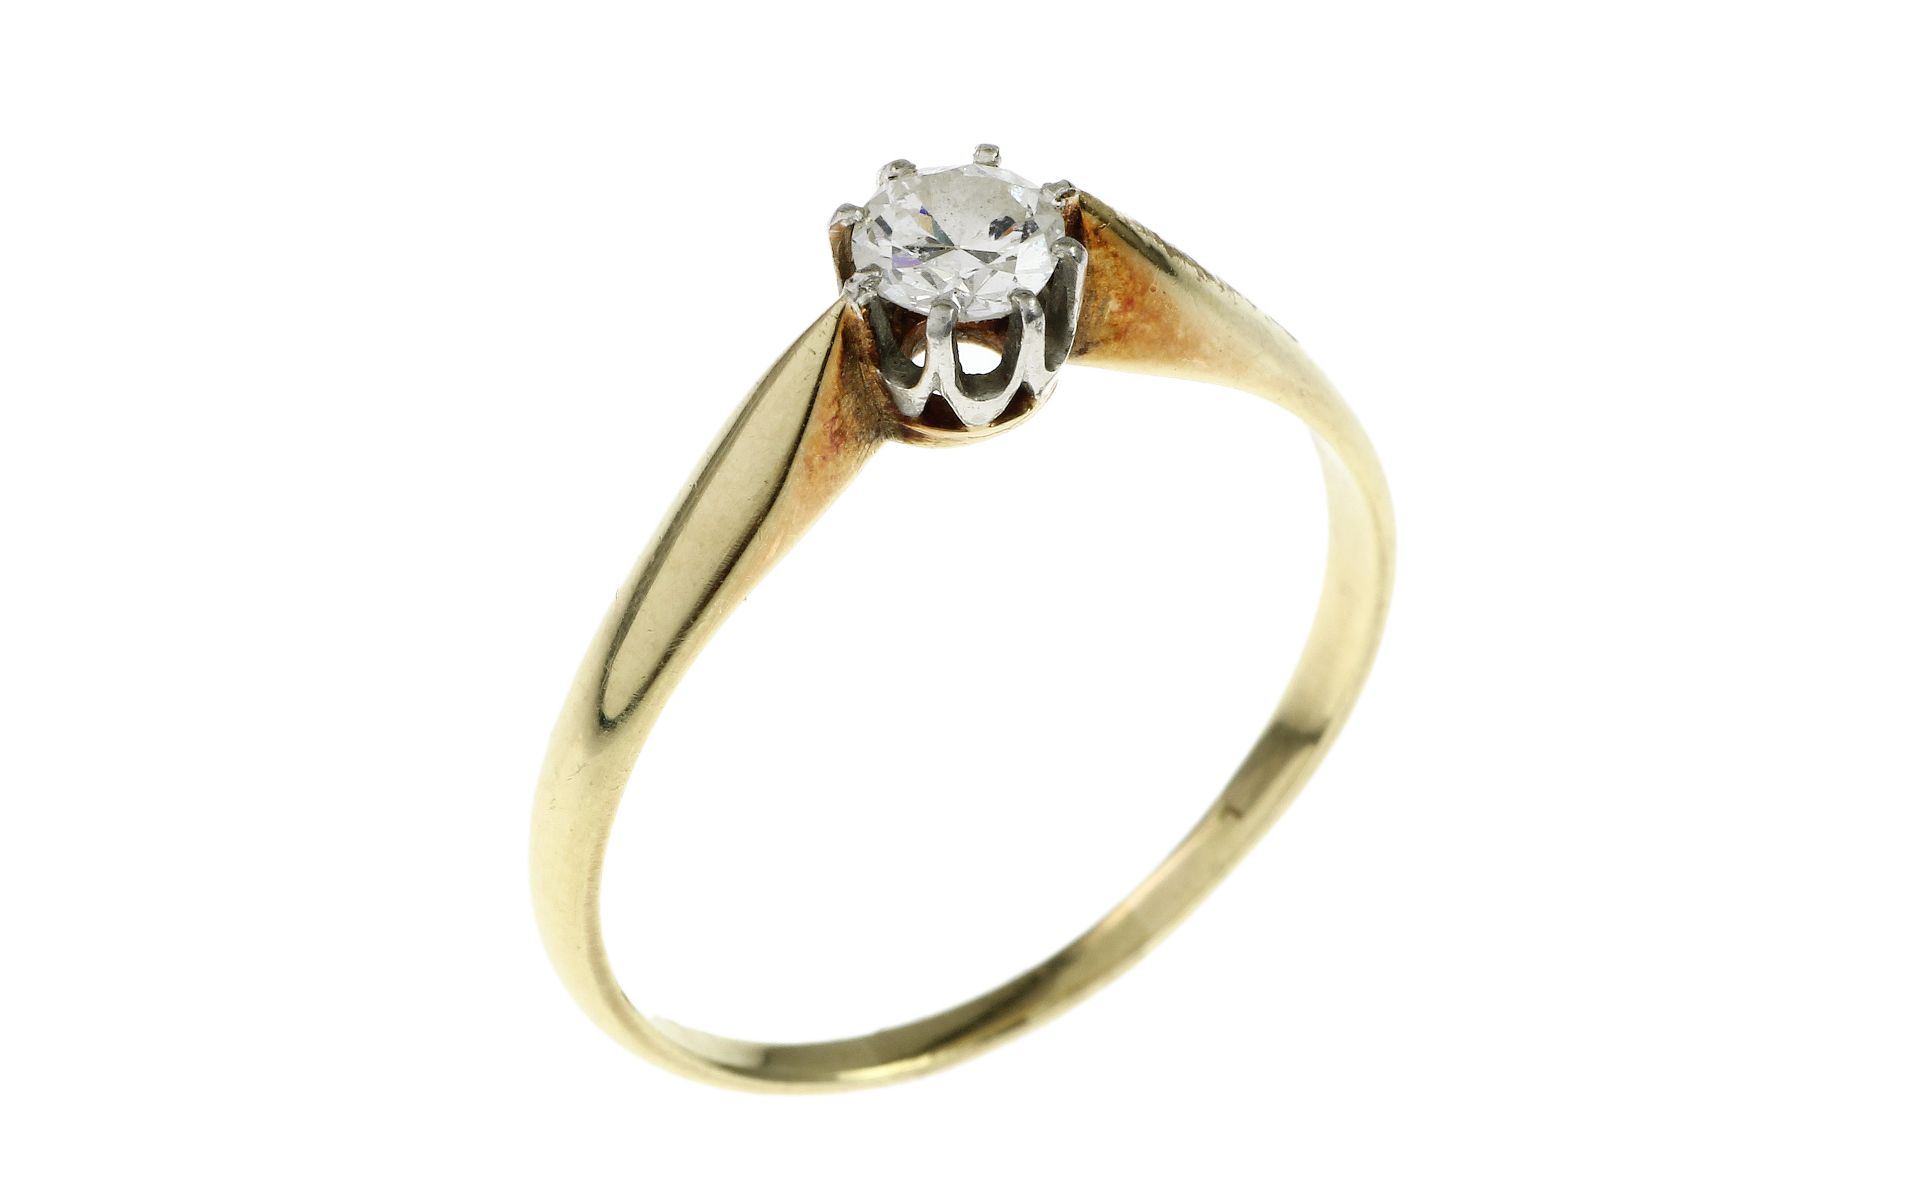 Ring 2.5g 585/- Gelbgold und Weissgold mit Diamant ca. 0.30 ct. H/pi1. Ringgroesse ca. 61